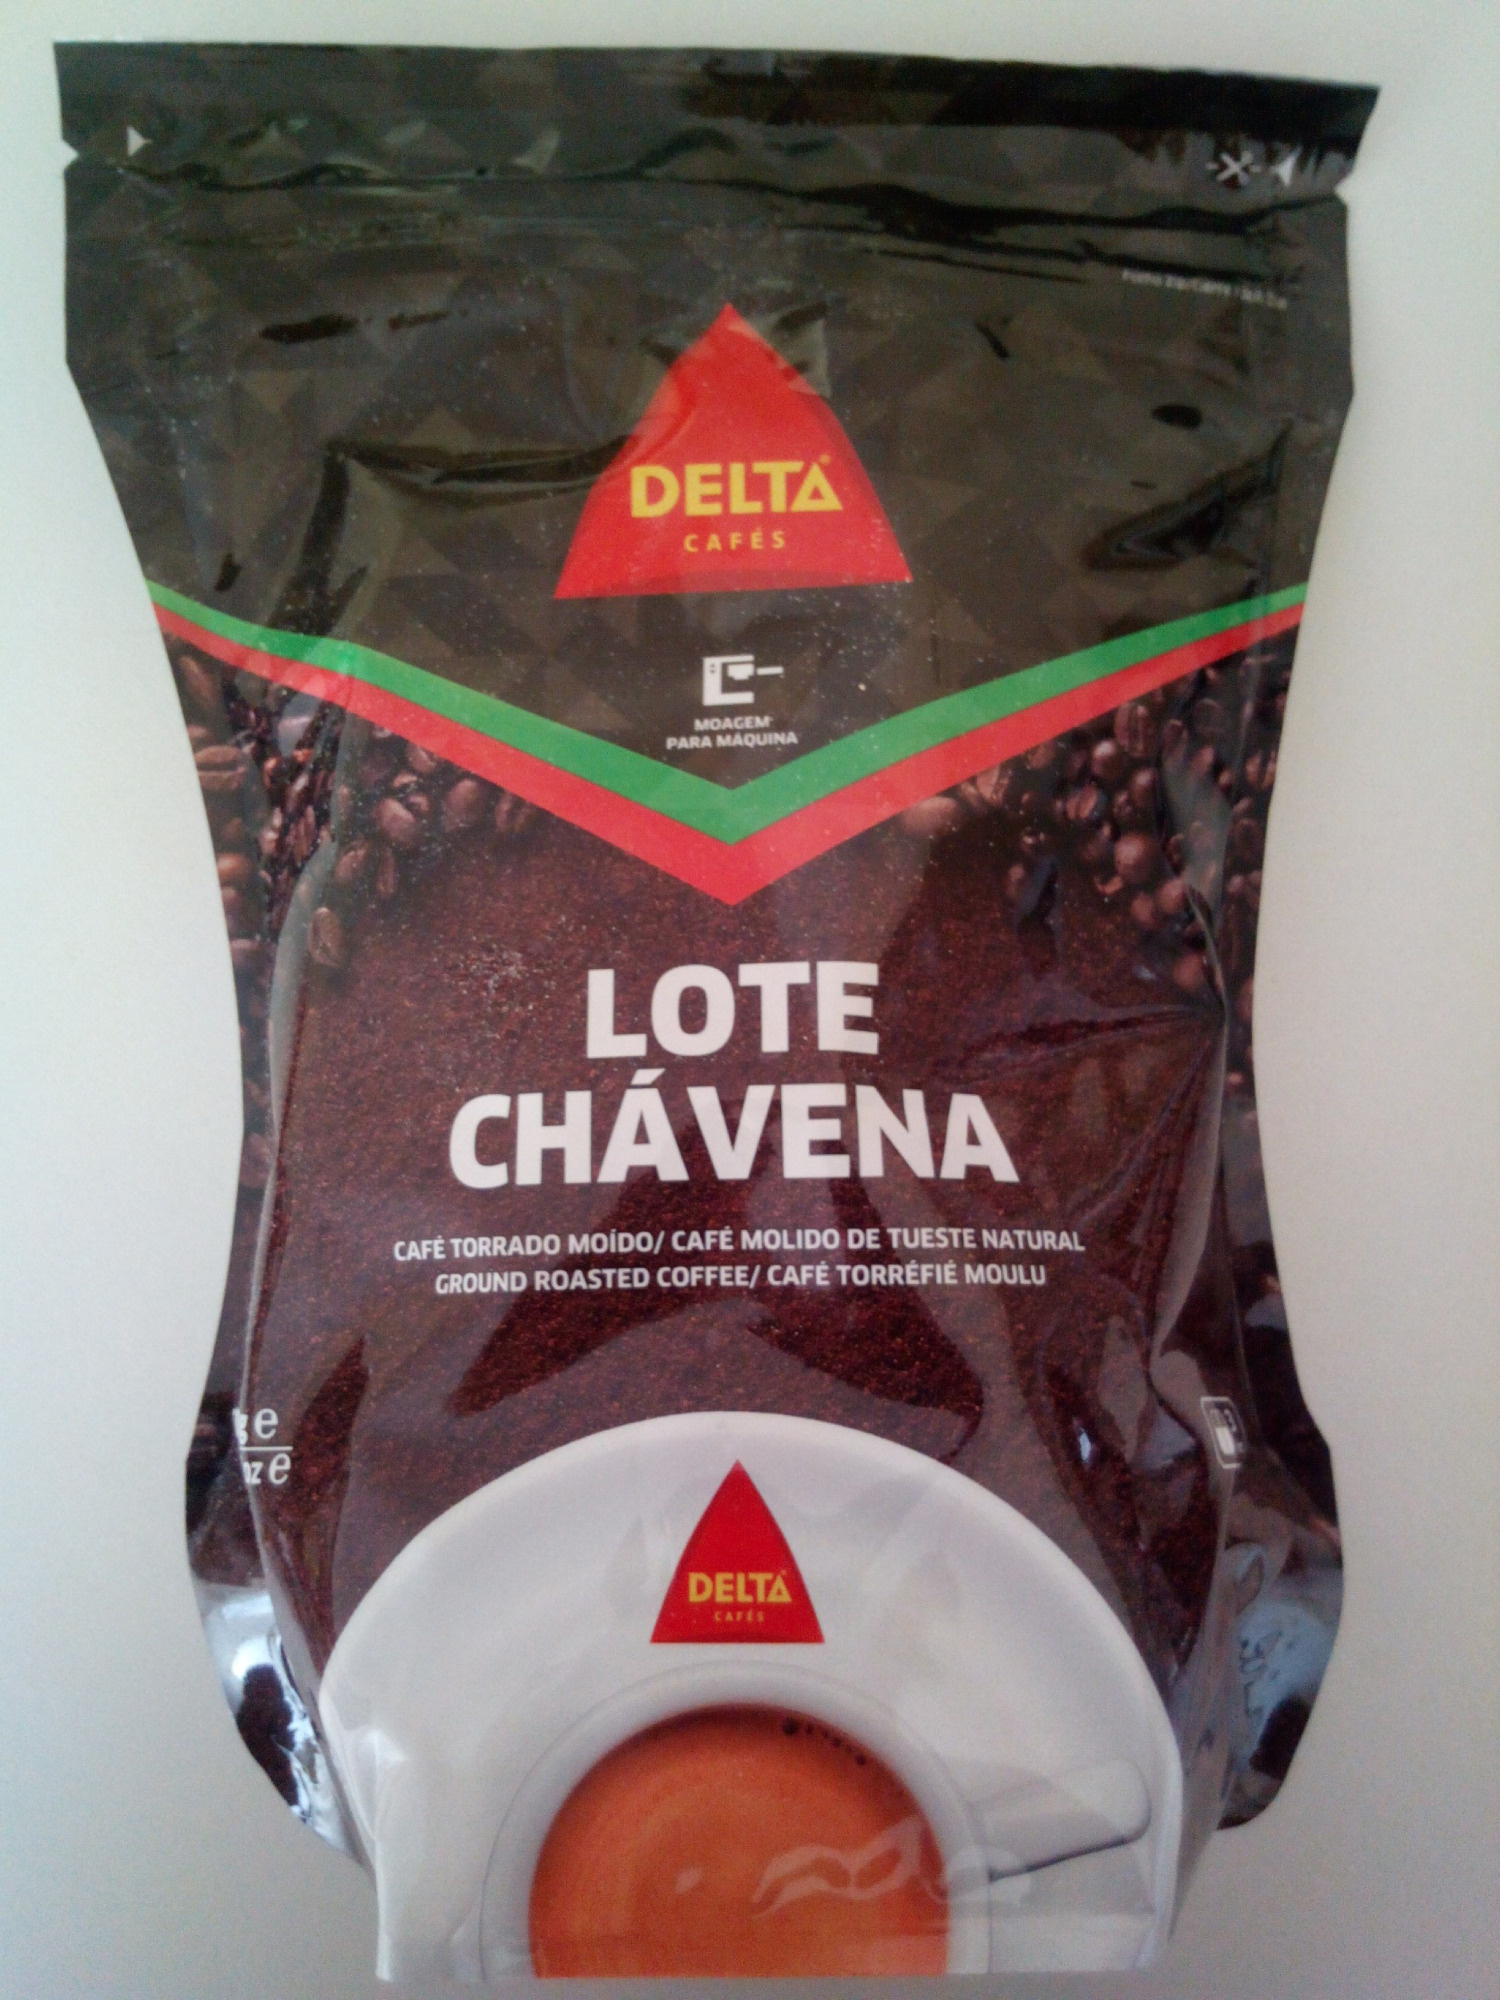 Delta Lote Chávena - Product - pt